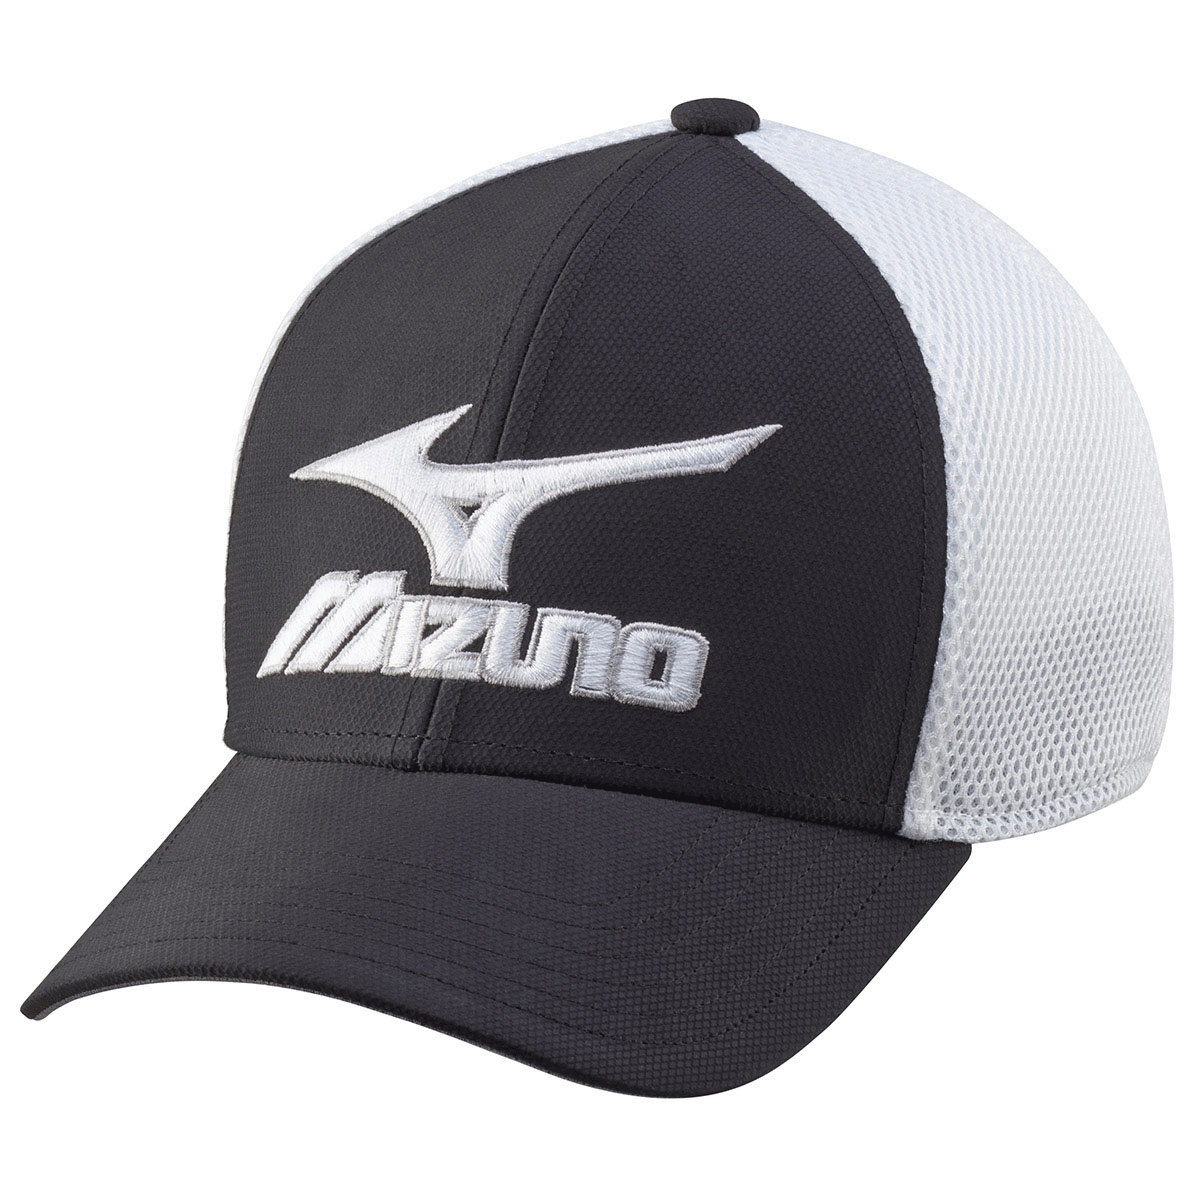 Mizuno Golf Logo - MIZUNO PHANTOM MENS PERFORMANCE FITTED GOLF CAP - BLACK / WHITE ...